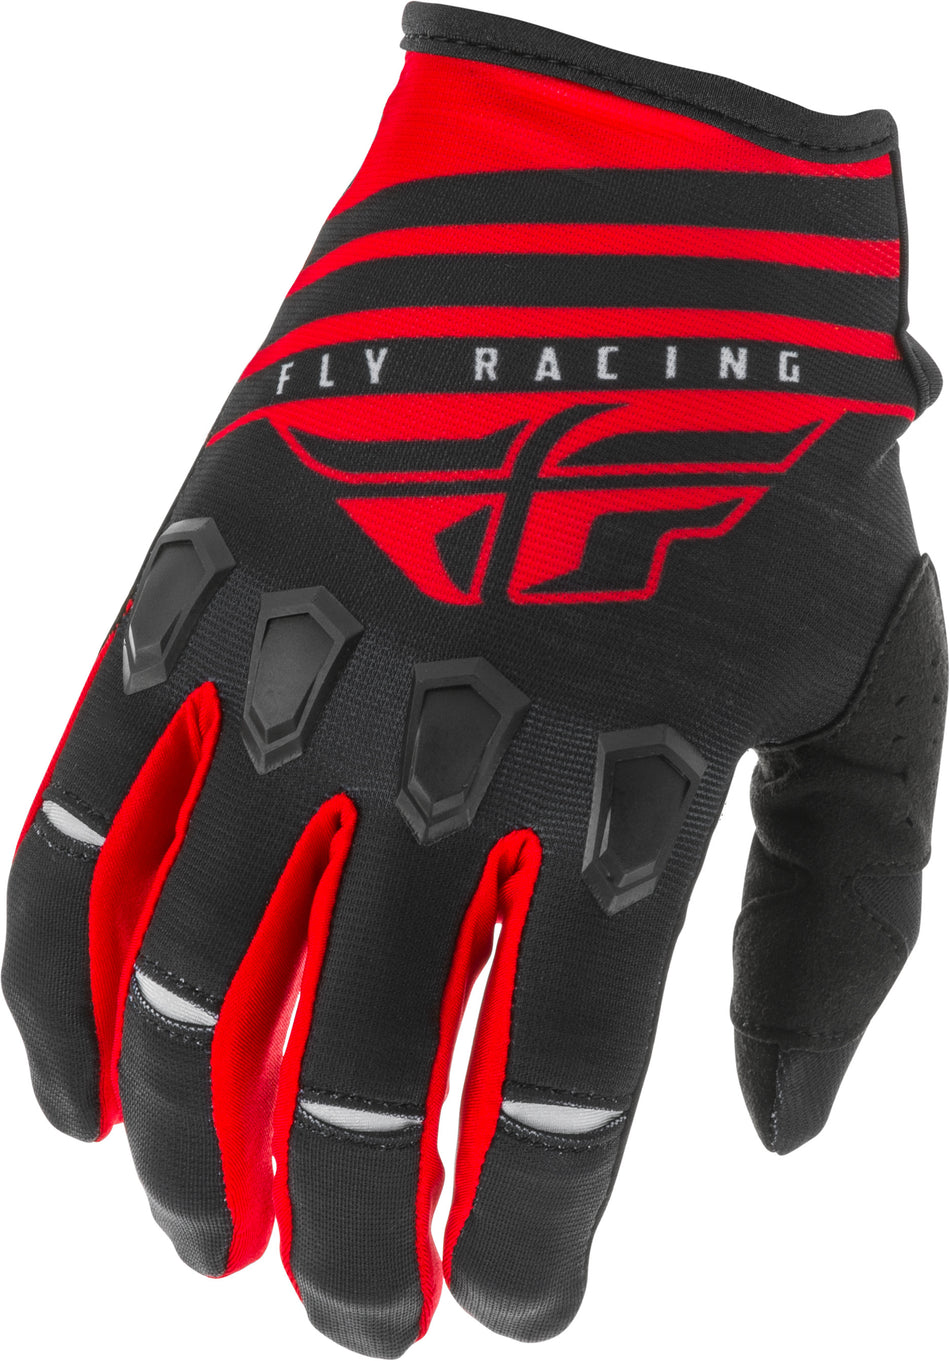 FLY RACING Kinetic K220 Gloves Red/Black/White Sz 05 373-51305